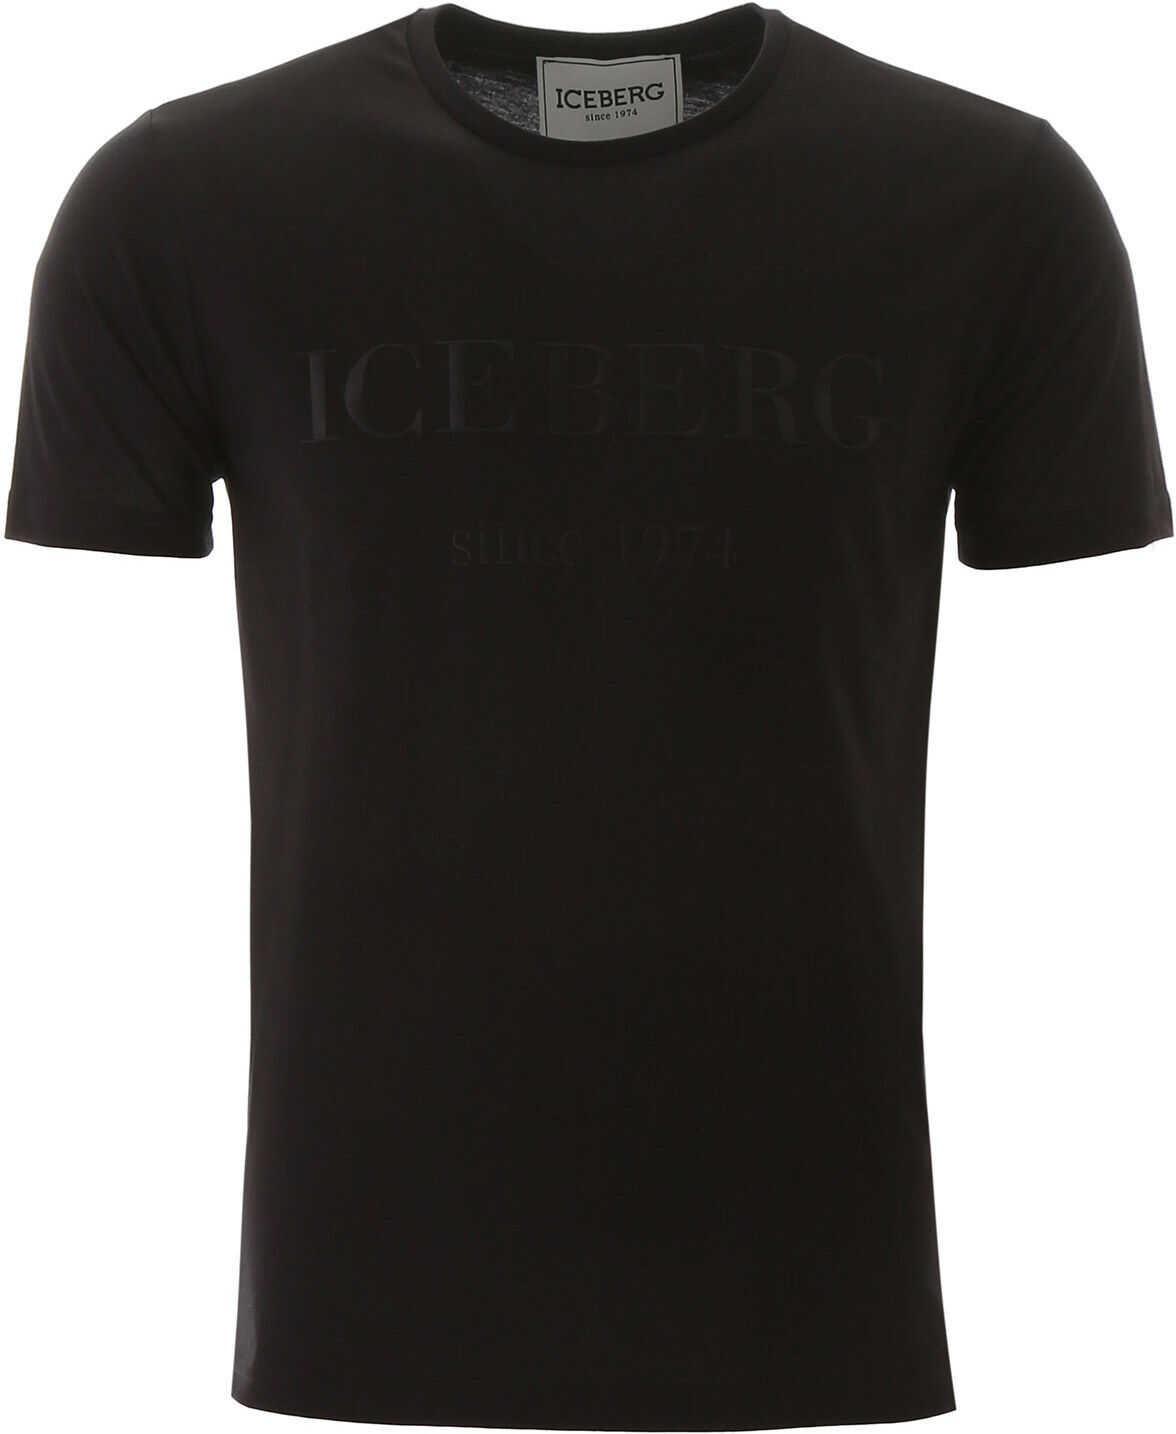 Iceberg T-Shirt With Embroidered Logo NERO